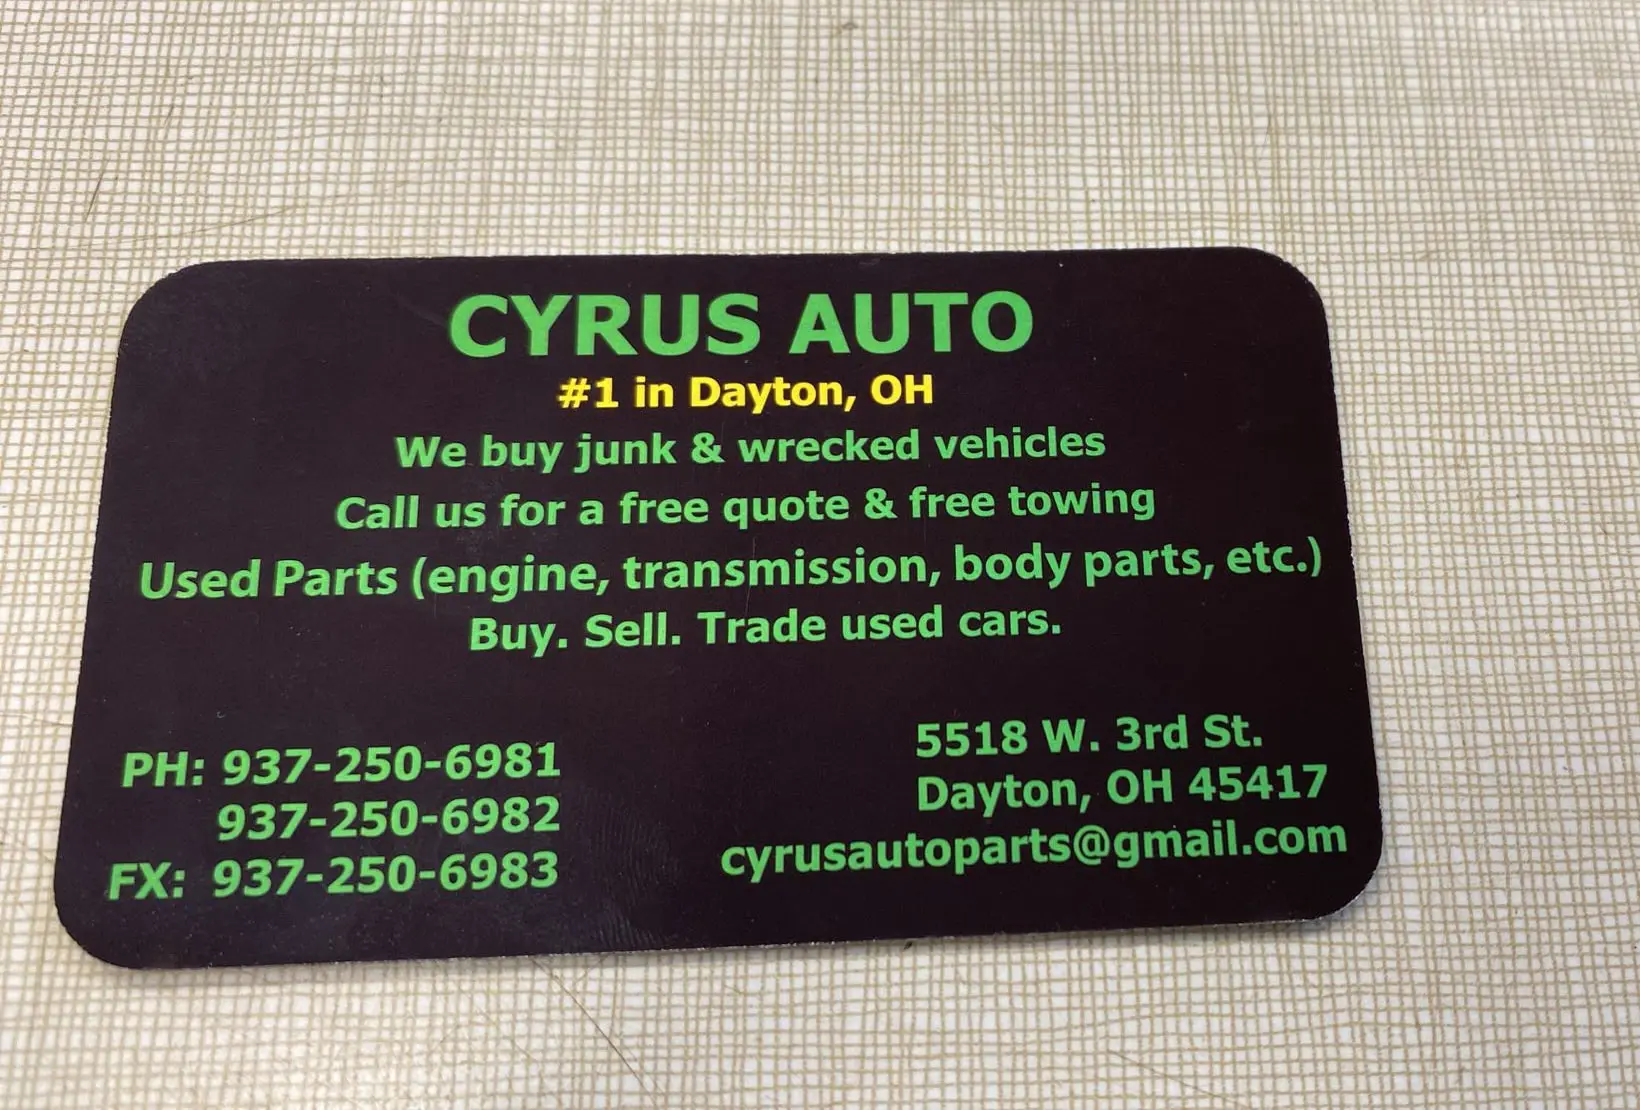 Cyrus Auto Best Salvage Yard Near Me Dayton Ohio-Cyrus Auto Parts